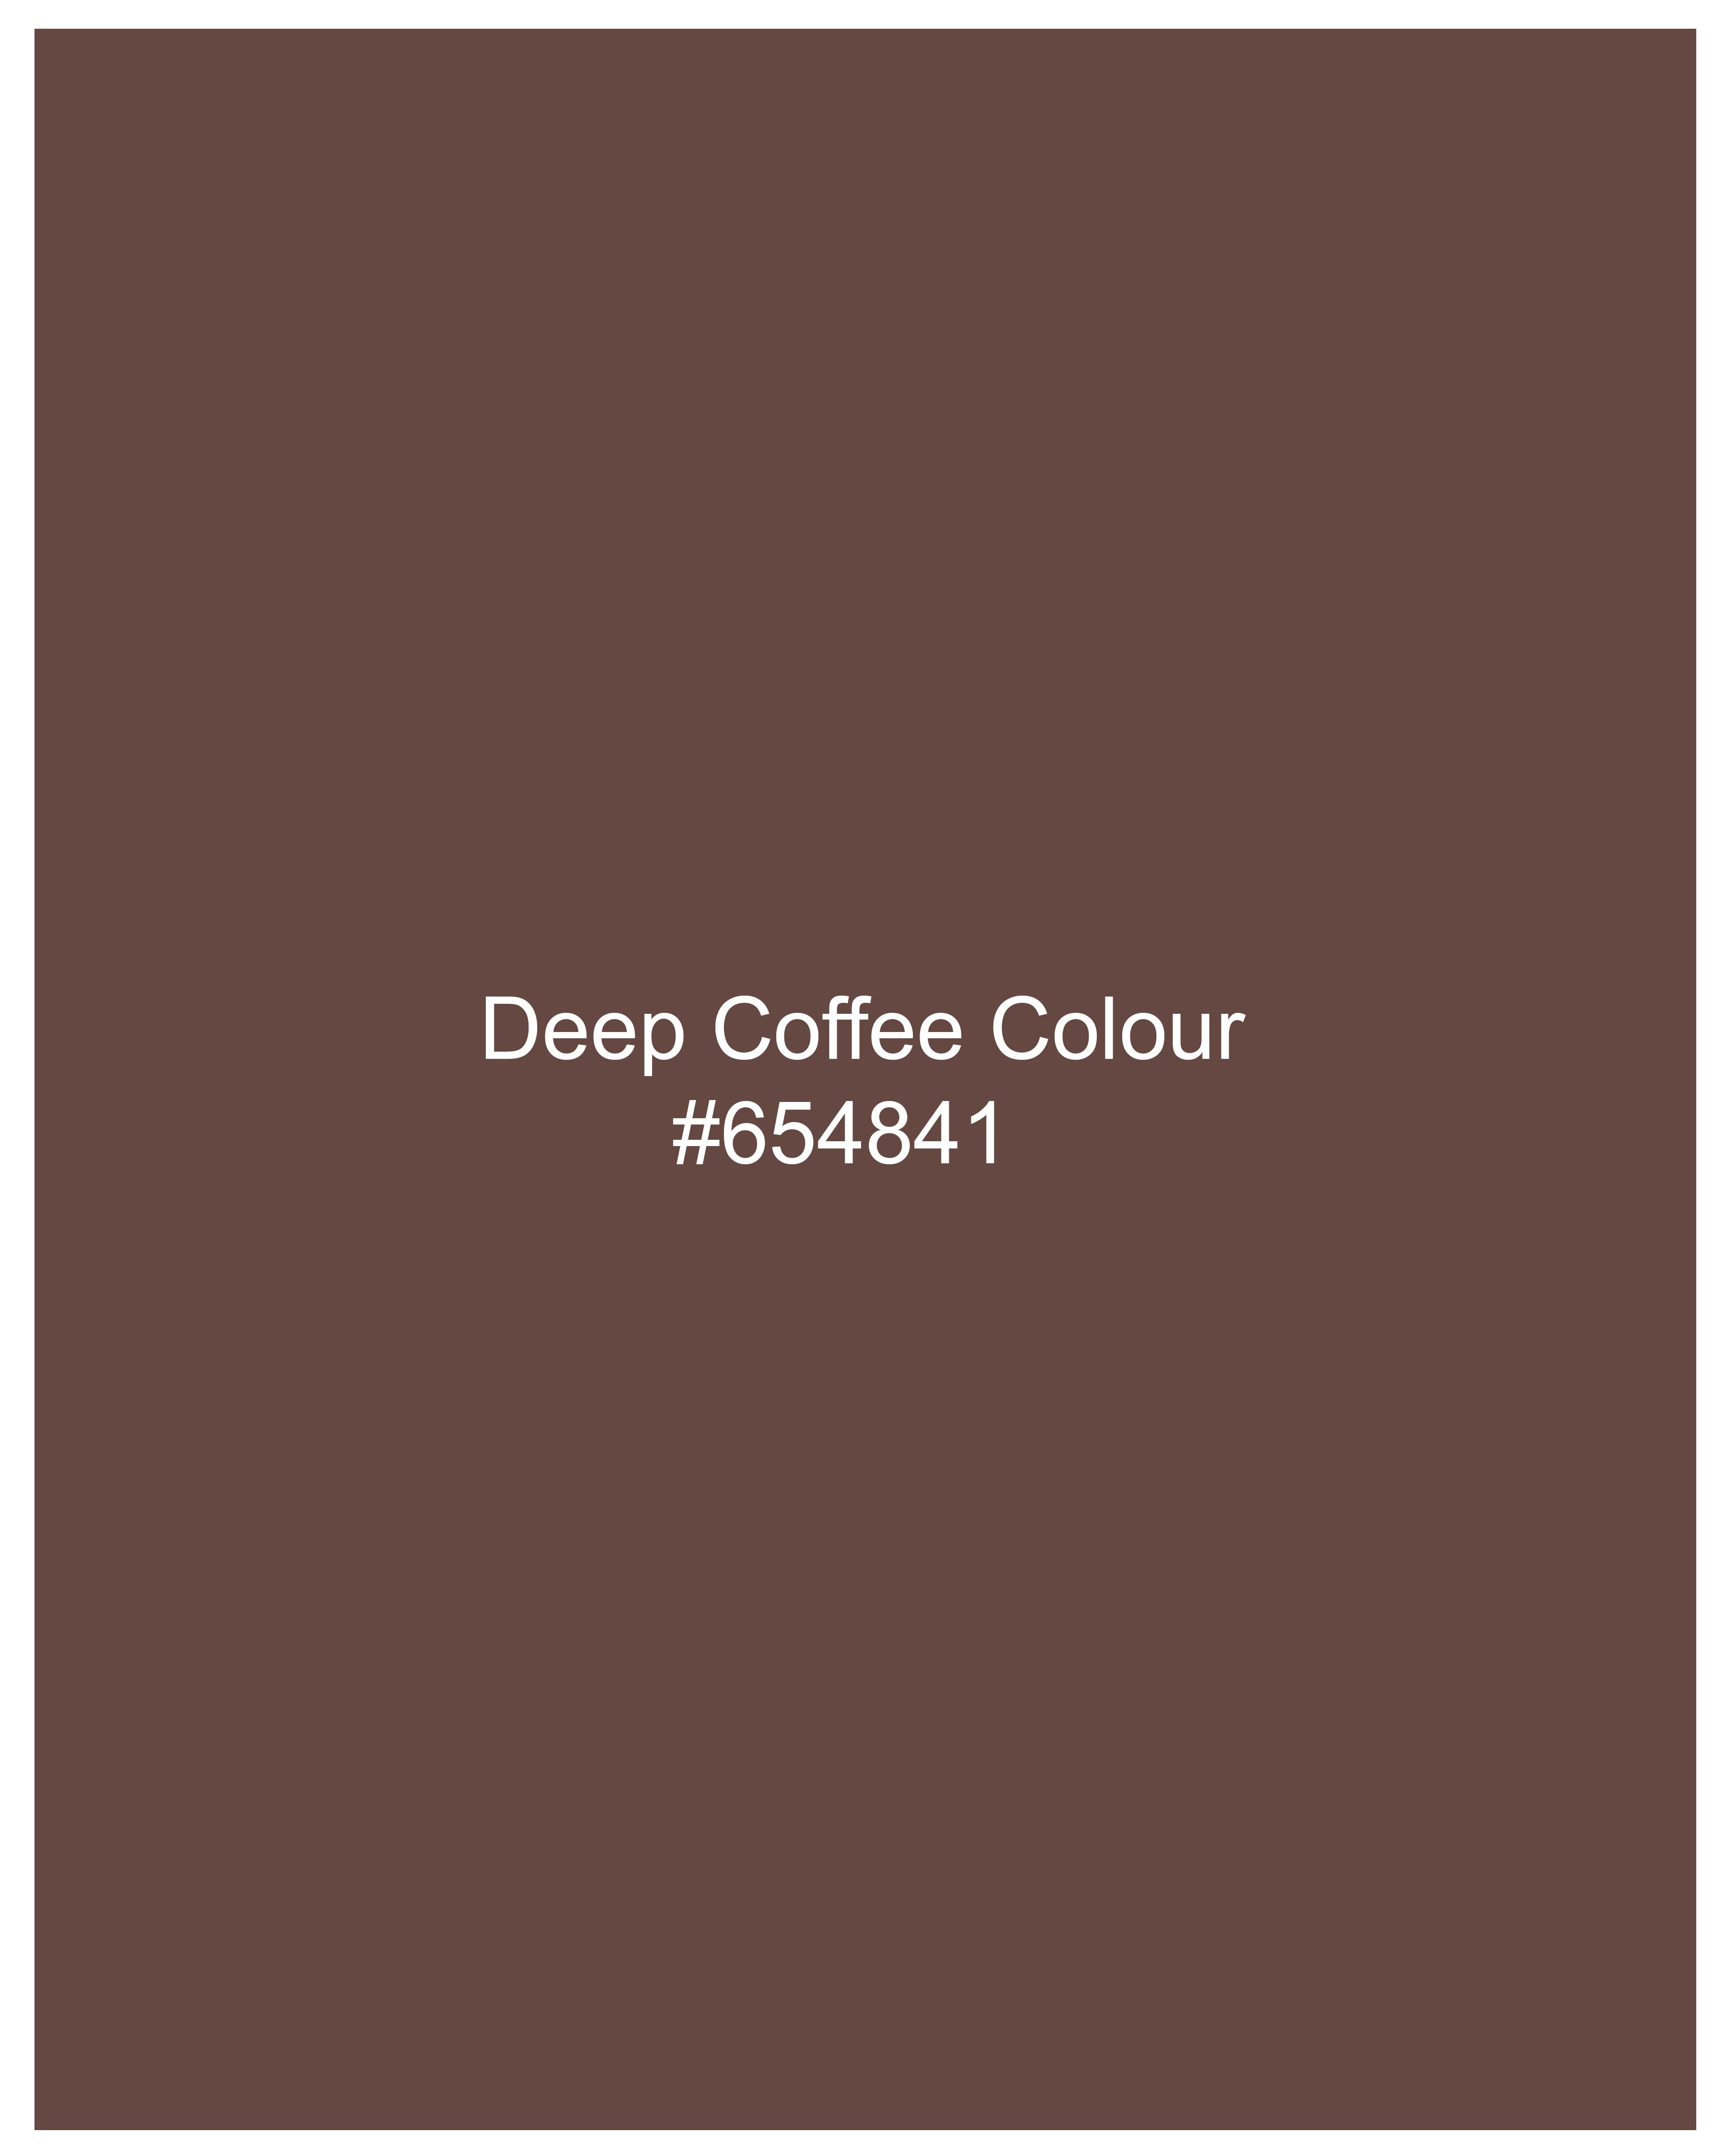 Deep Coffee Brown Houndstooth Shirt  8630-BD-BLK-38,8630-BD-BLK-H-38,8630-BD-BLK-39,8630-BD-BLK-H-39,8630-BD-BLK-40,8630-BD-BLK-H-40,8630-BD-BLK-42,8630-BD-BLK-H-42,8630-BD-BLK-44,8630-BD-BLK-H-44,8630-BD-BLK-46,8630-BD-BLK-H-46,8630-BD-BLK-48,8630-BD-BLK-H-48,8630-BD-BLK-50,8630-BD-BLK-H-50,8630-BD-BLK-52,8630-BD-BLK-H-52